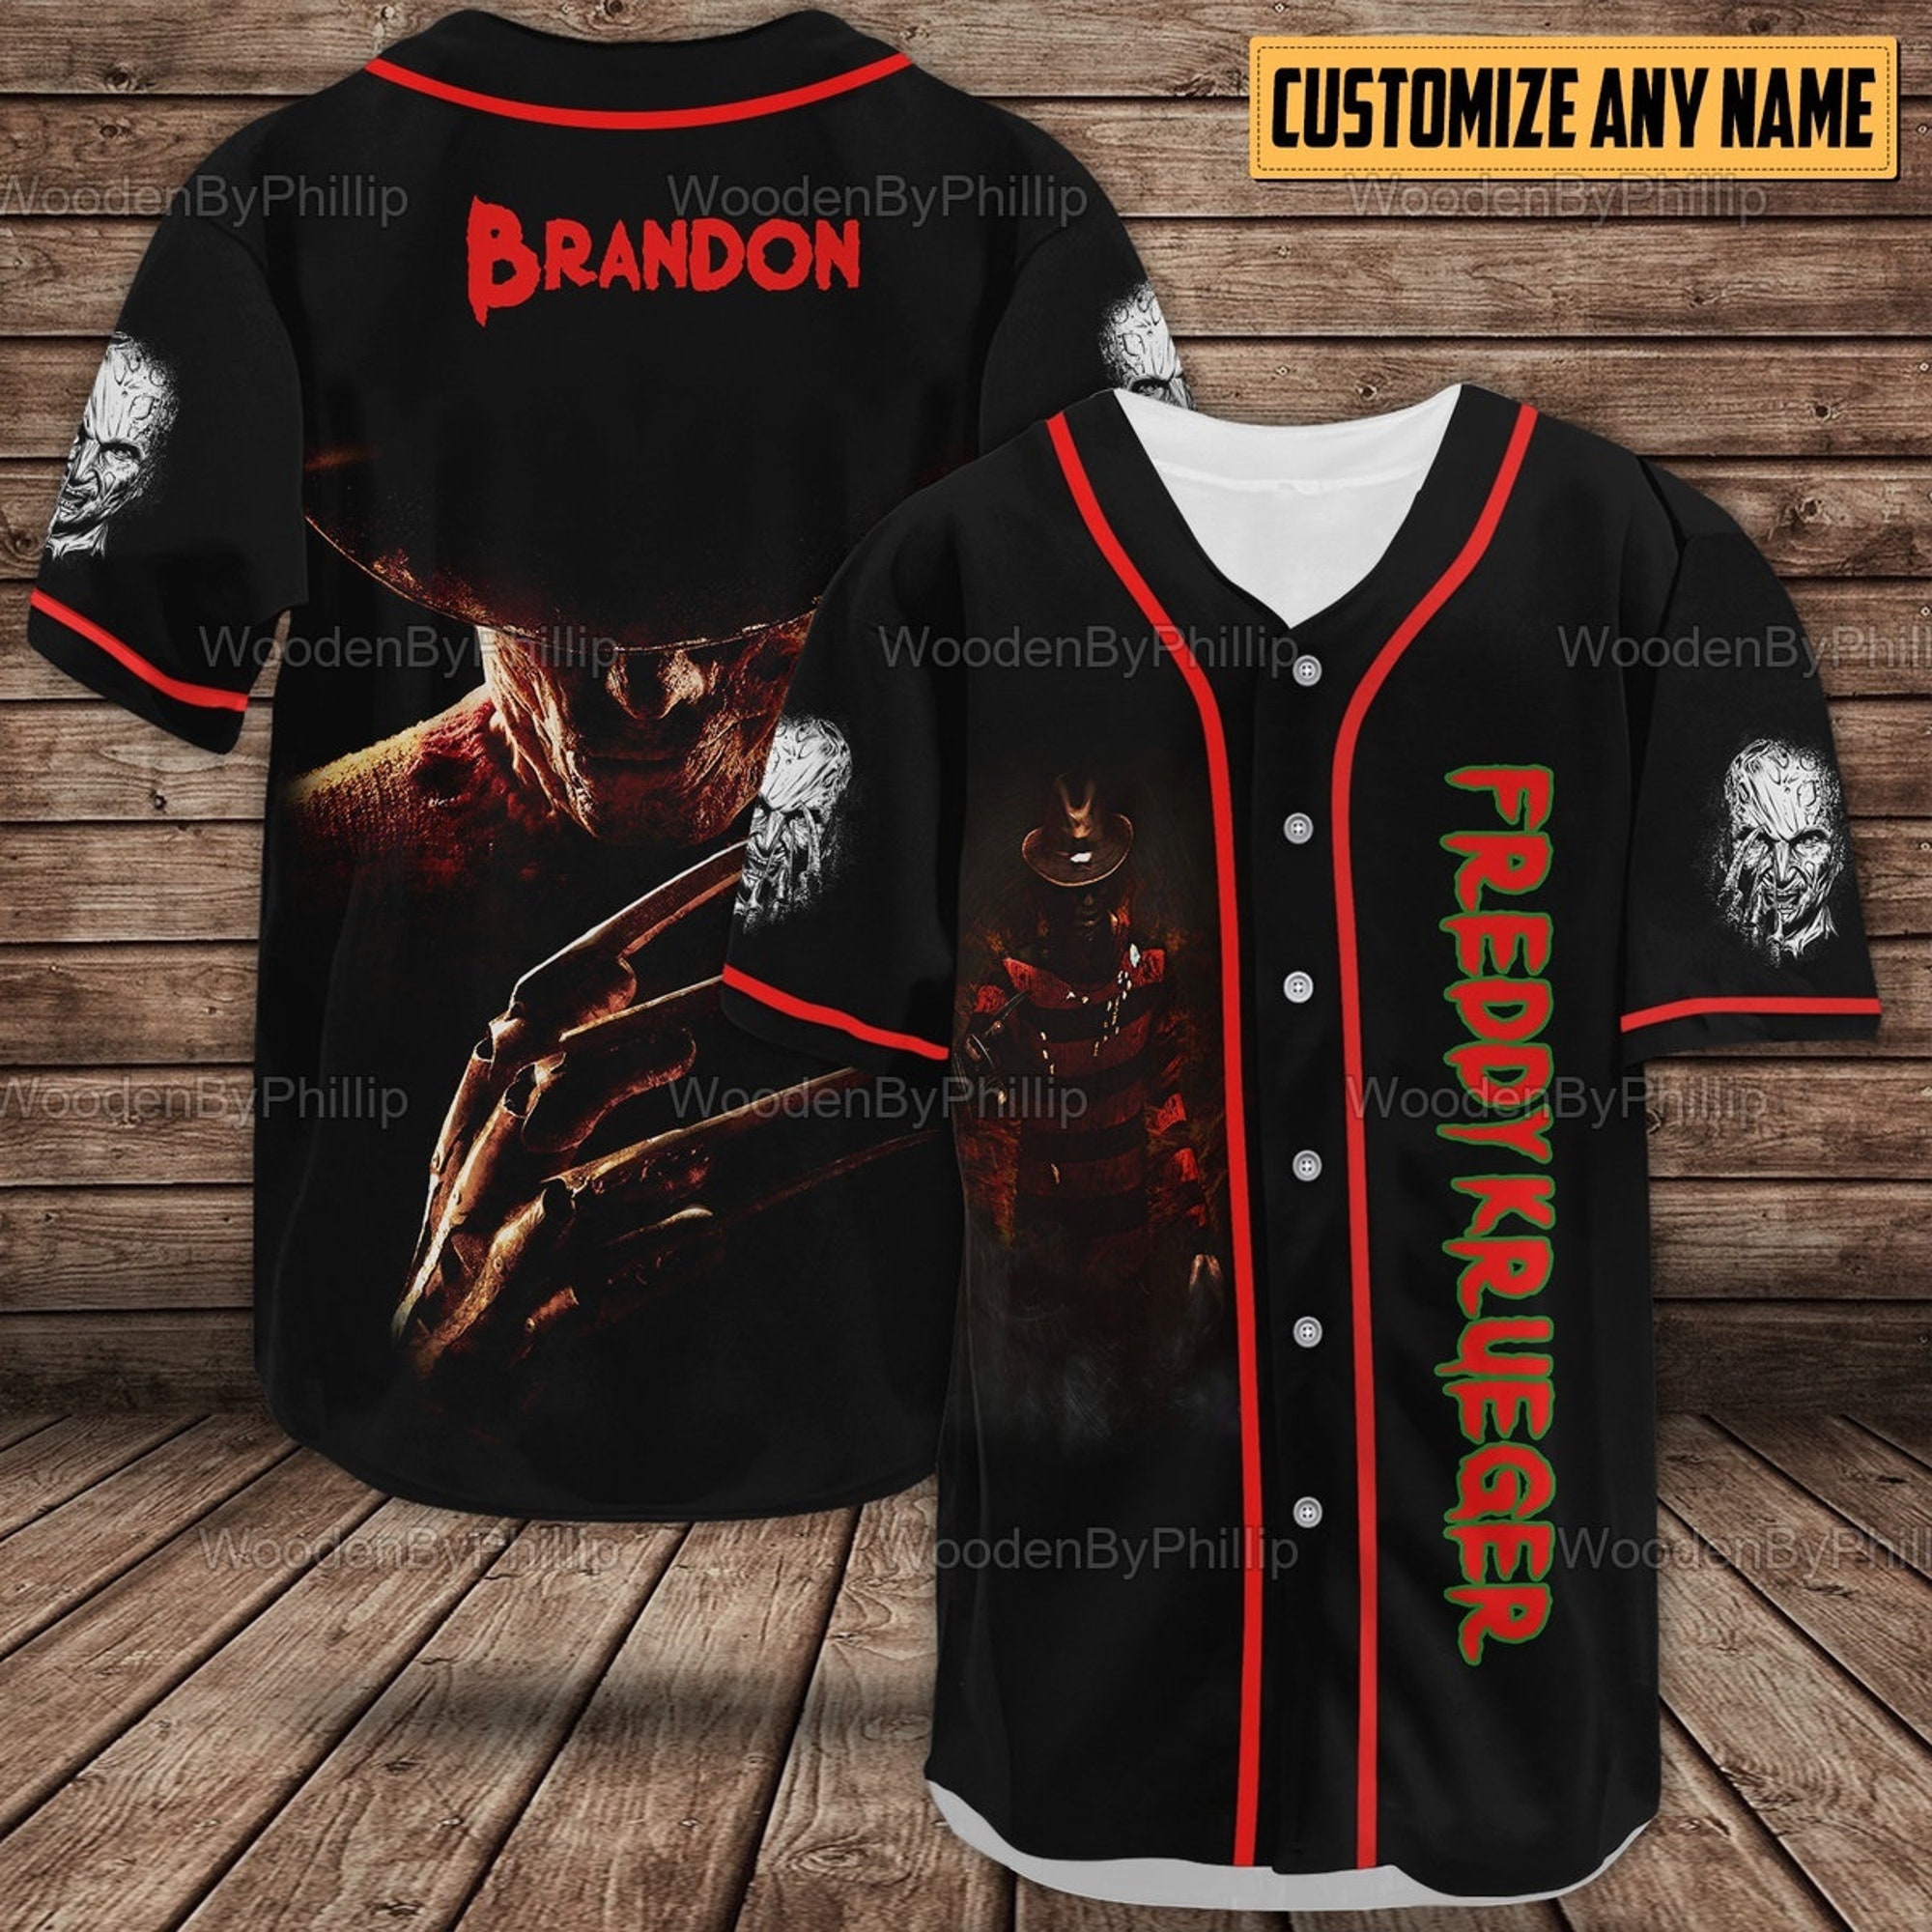 Freddy Krueger Baseball Shirt, Personalized Name Freddy Krueger Baseball Jersey